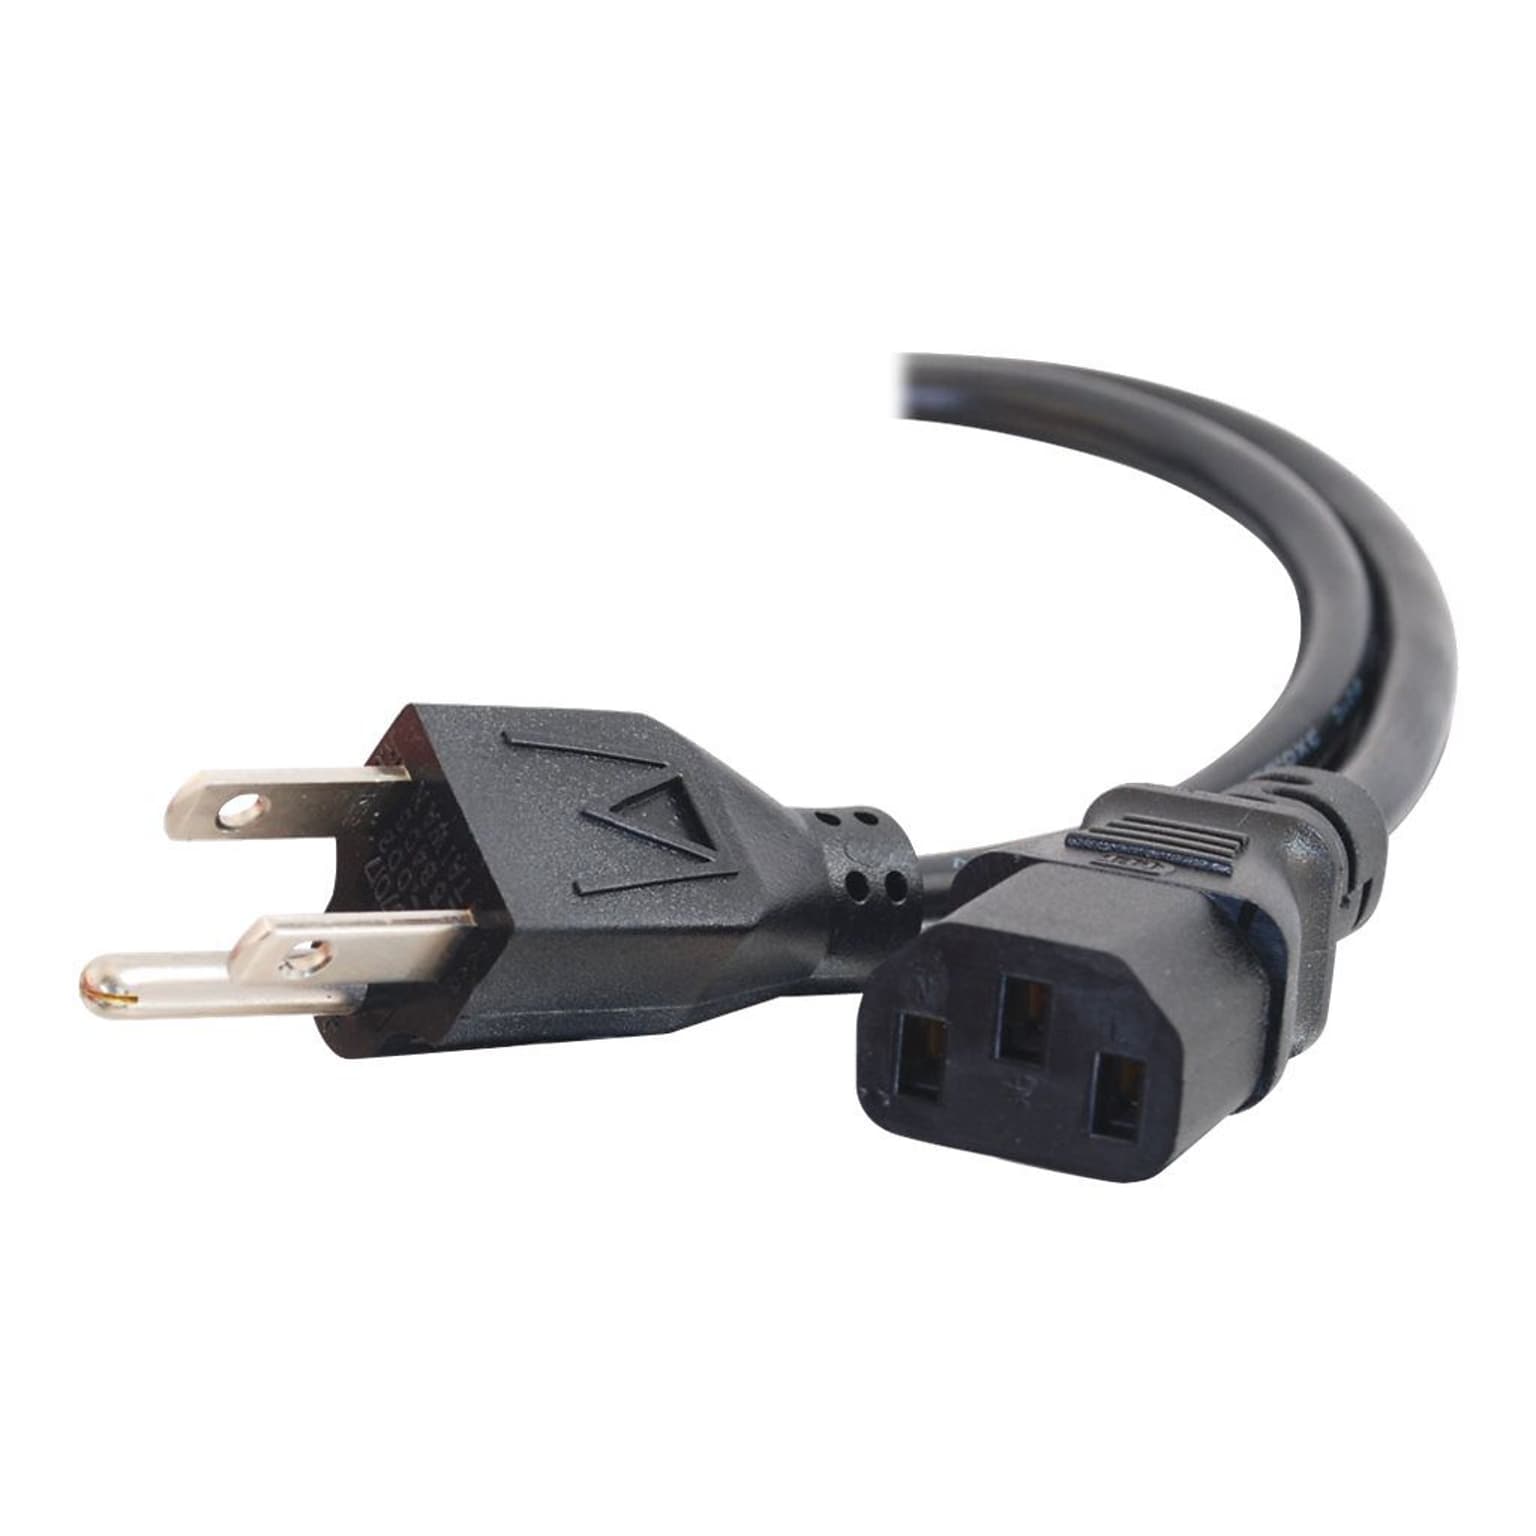 C2G® 25 NEMA 5-15P to IEC320C13 Universal Power Cord; Black